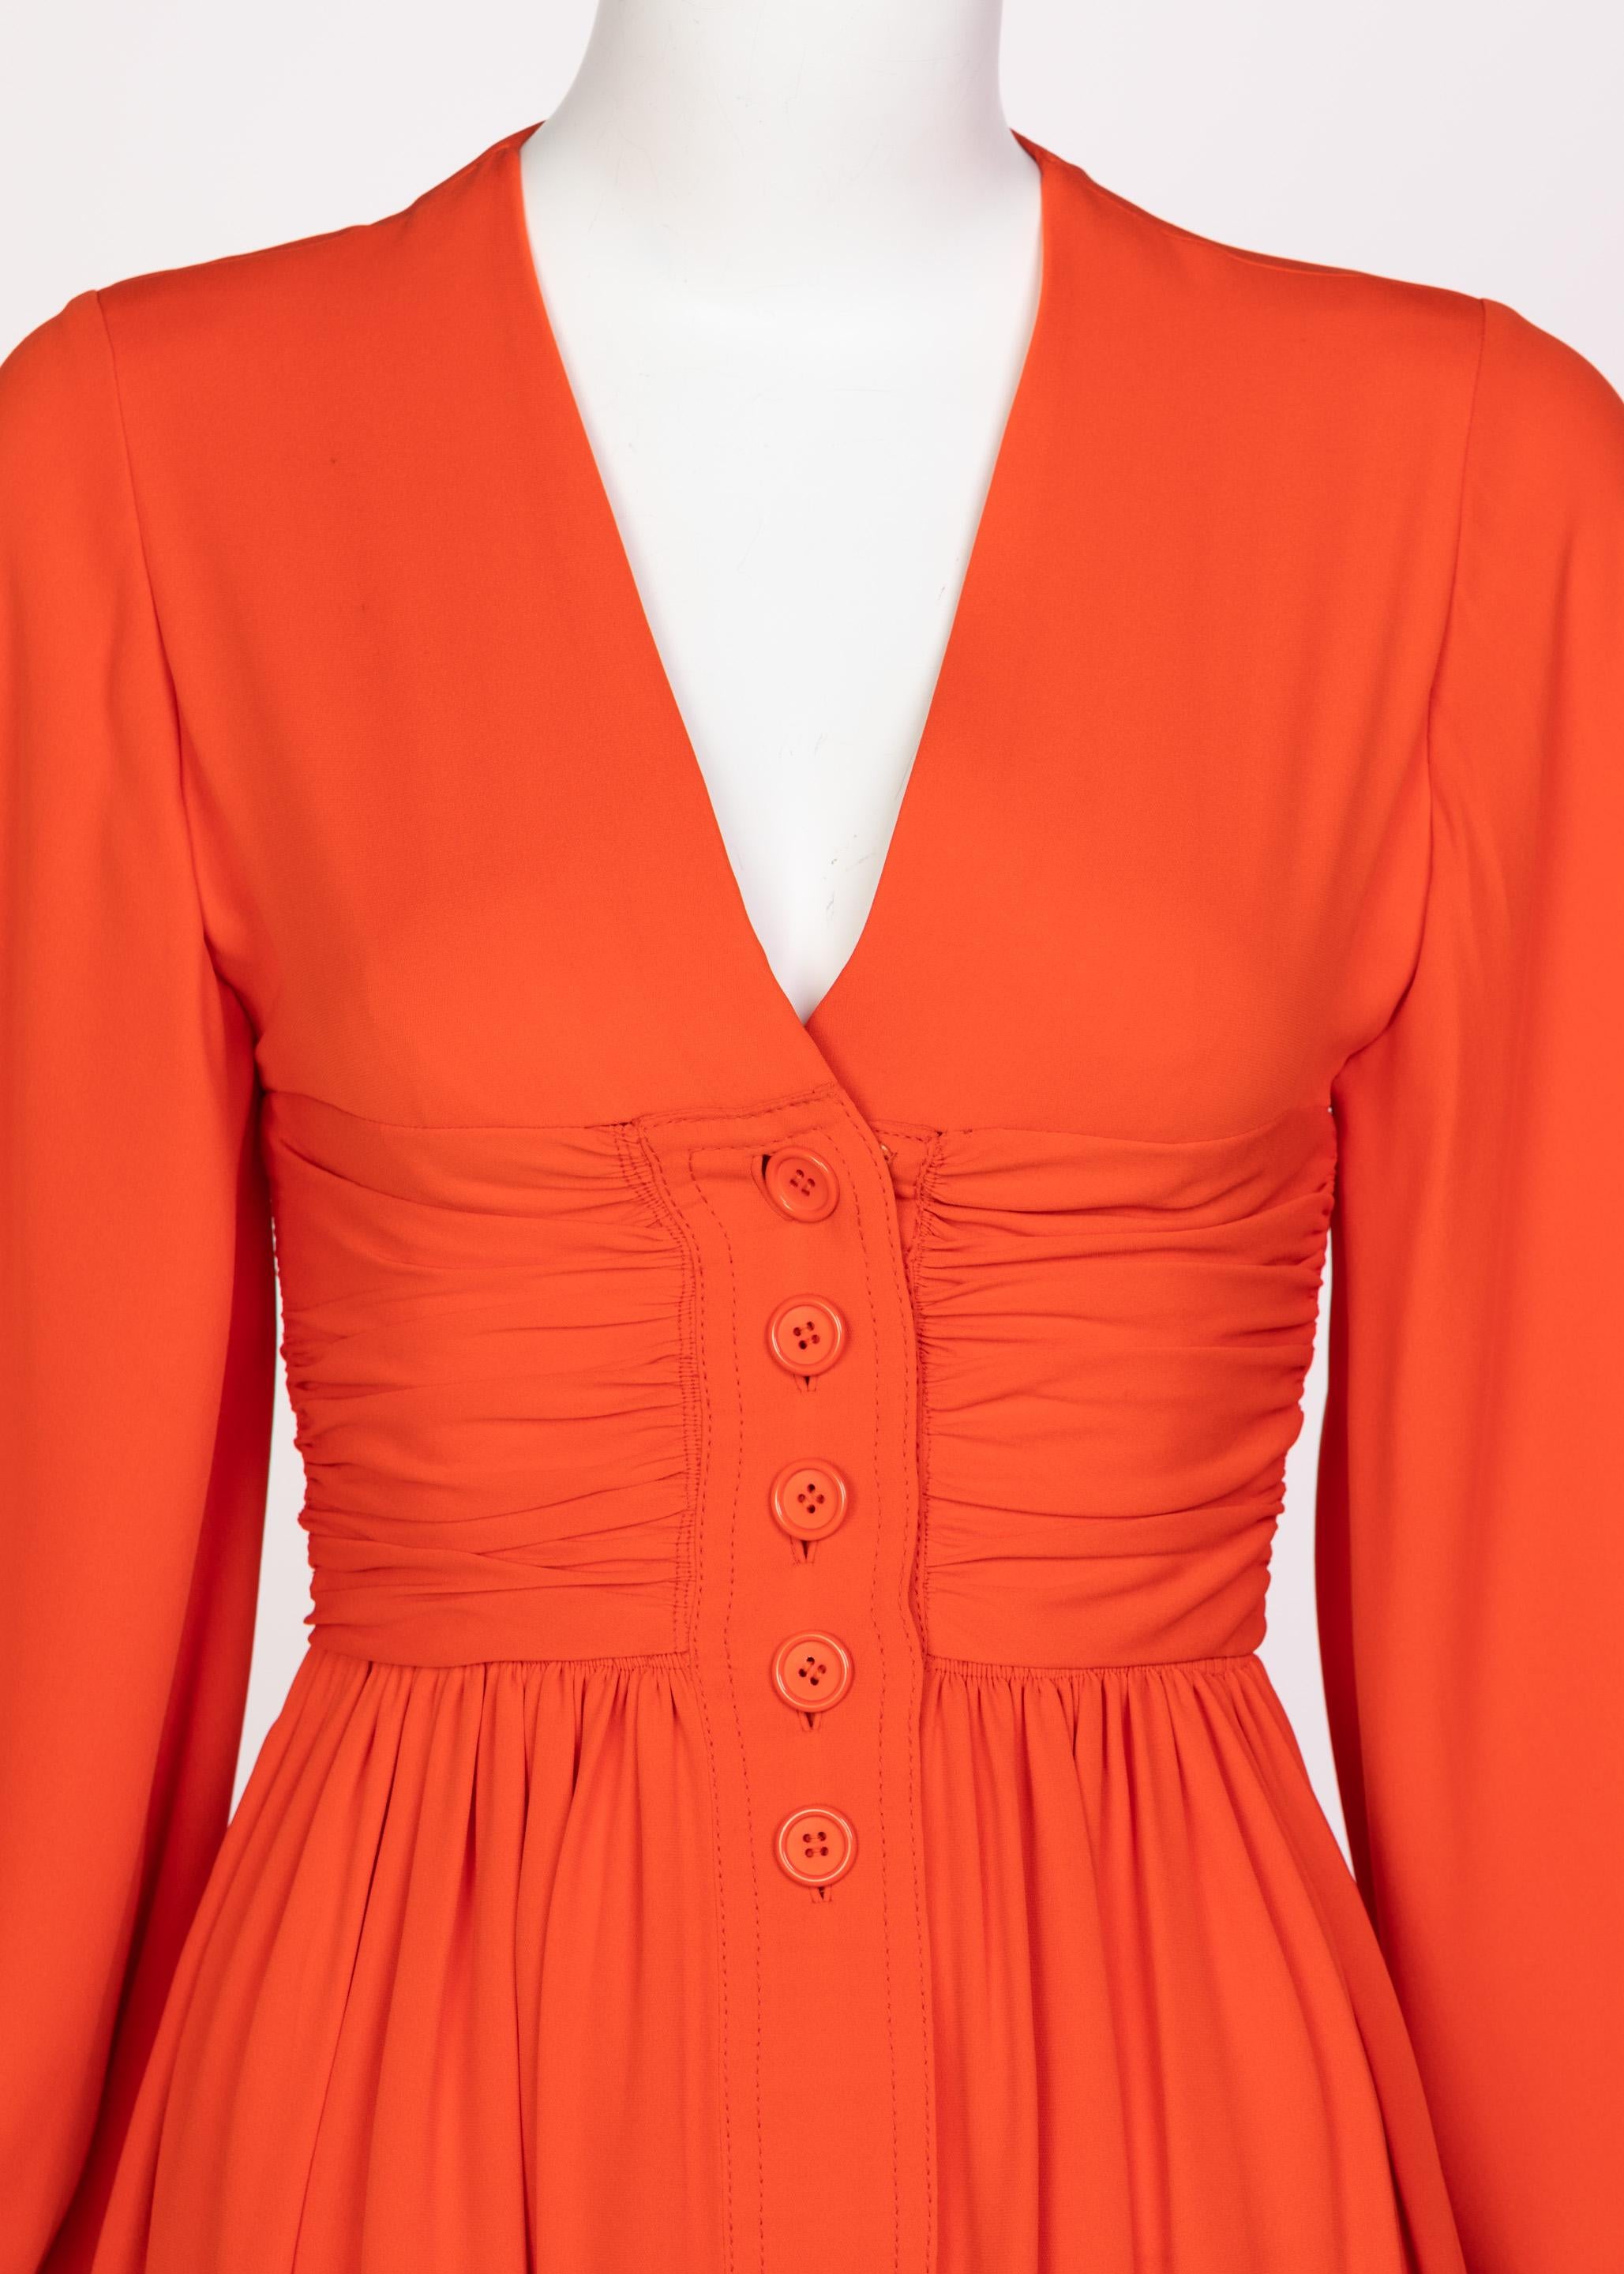 Galanos Orange Silk Plunge Neck Bishop Sleeve Dress, 1970s For Sale 1